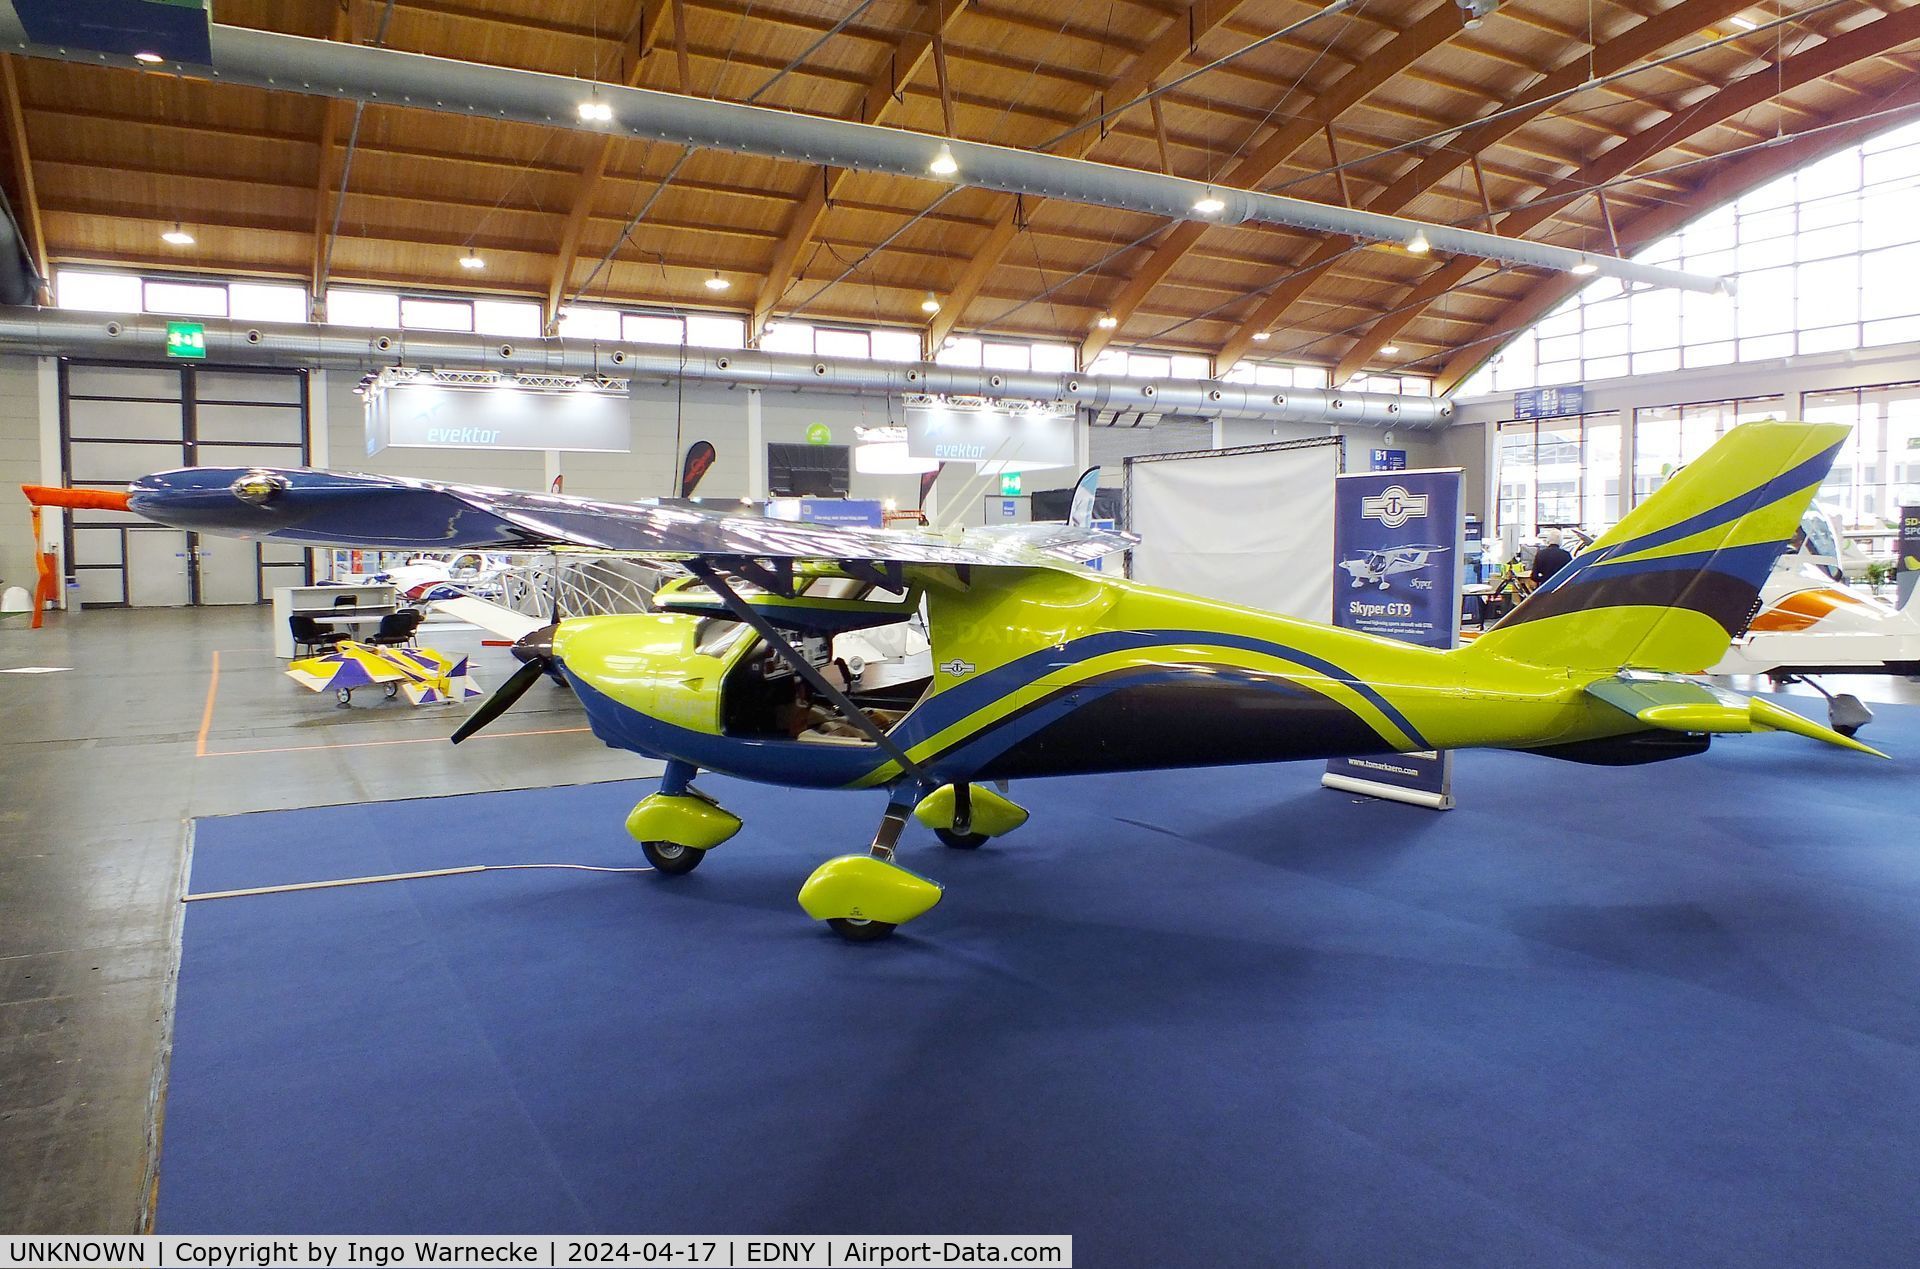 UNKNOWN, Tomark Aero Skyper GT9-600 C/N 41590, Tomark Aero Skyper GT9-600 at the AERO 2024, Friedrichshafen